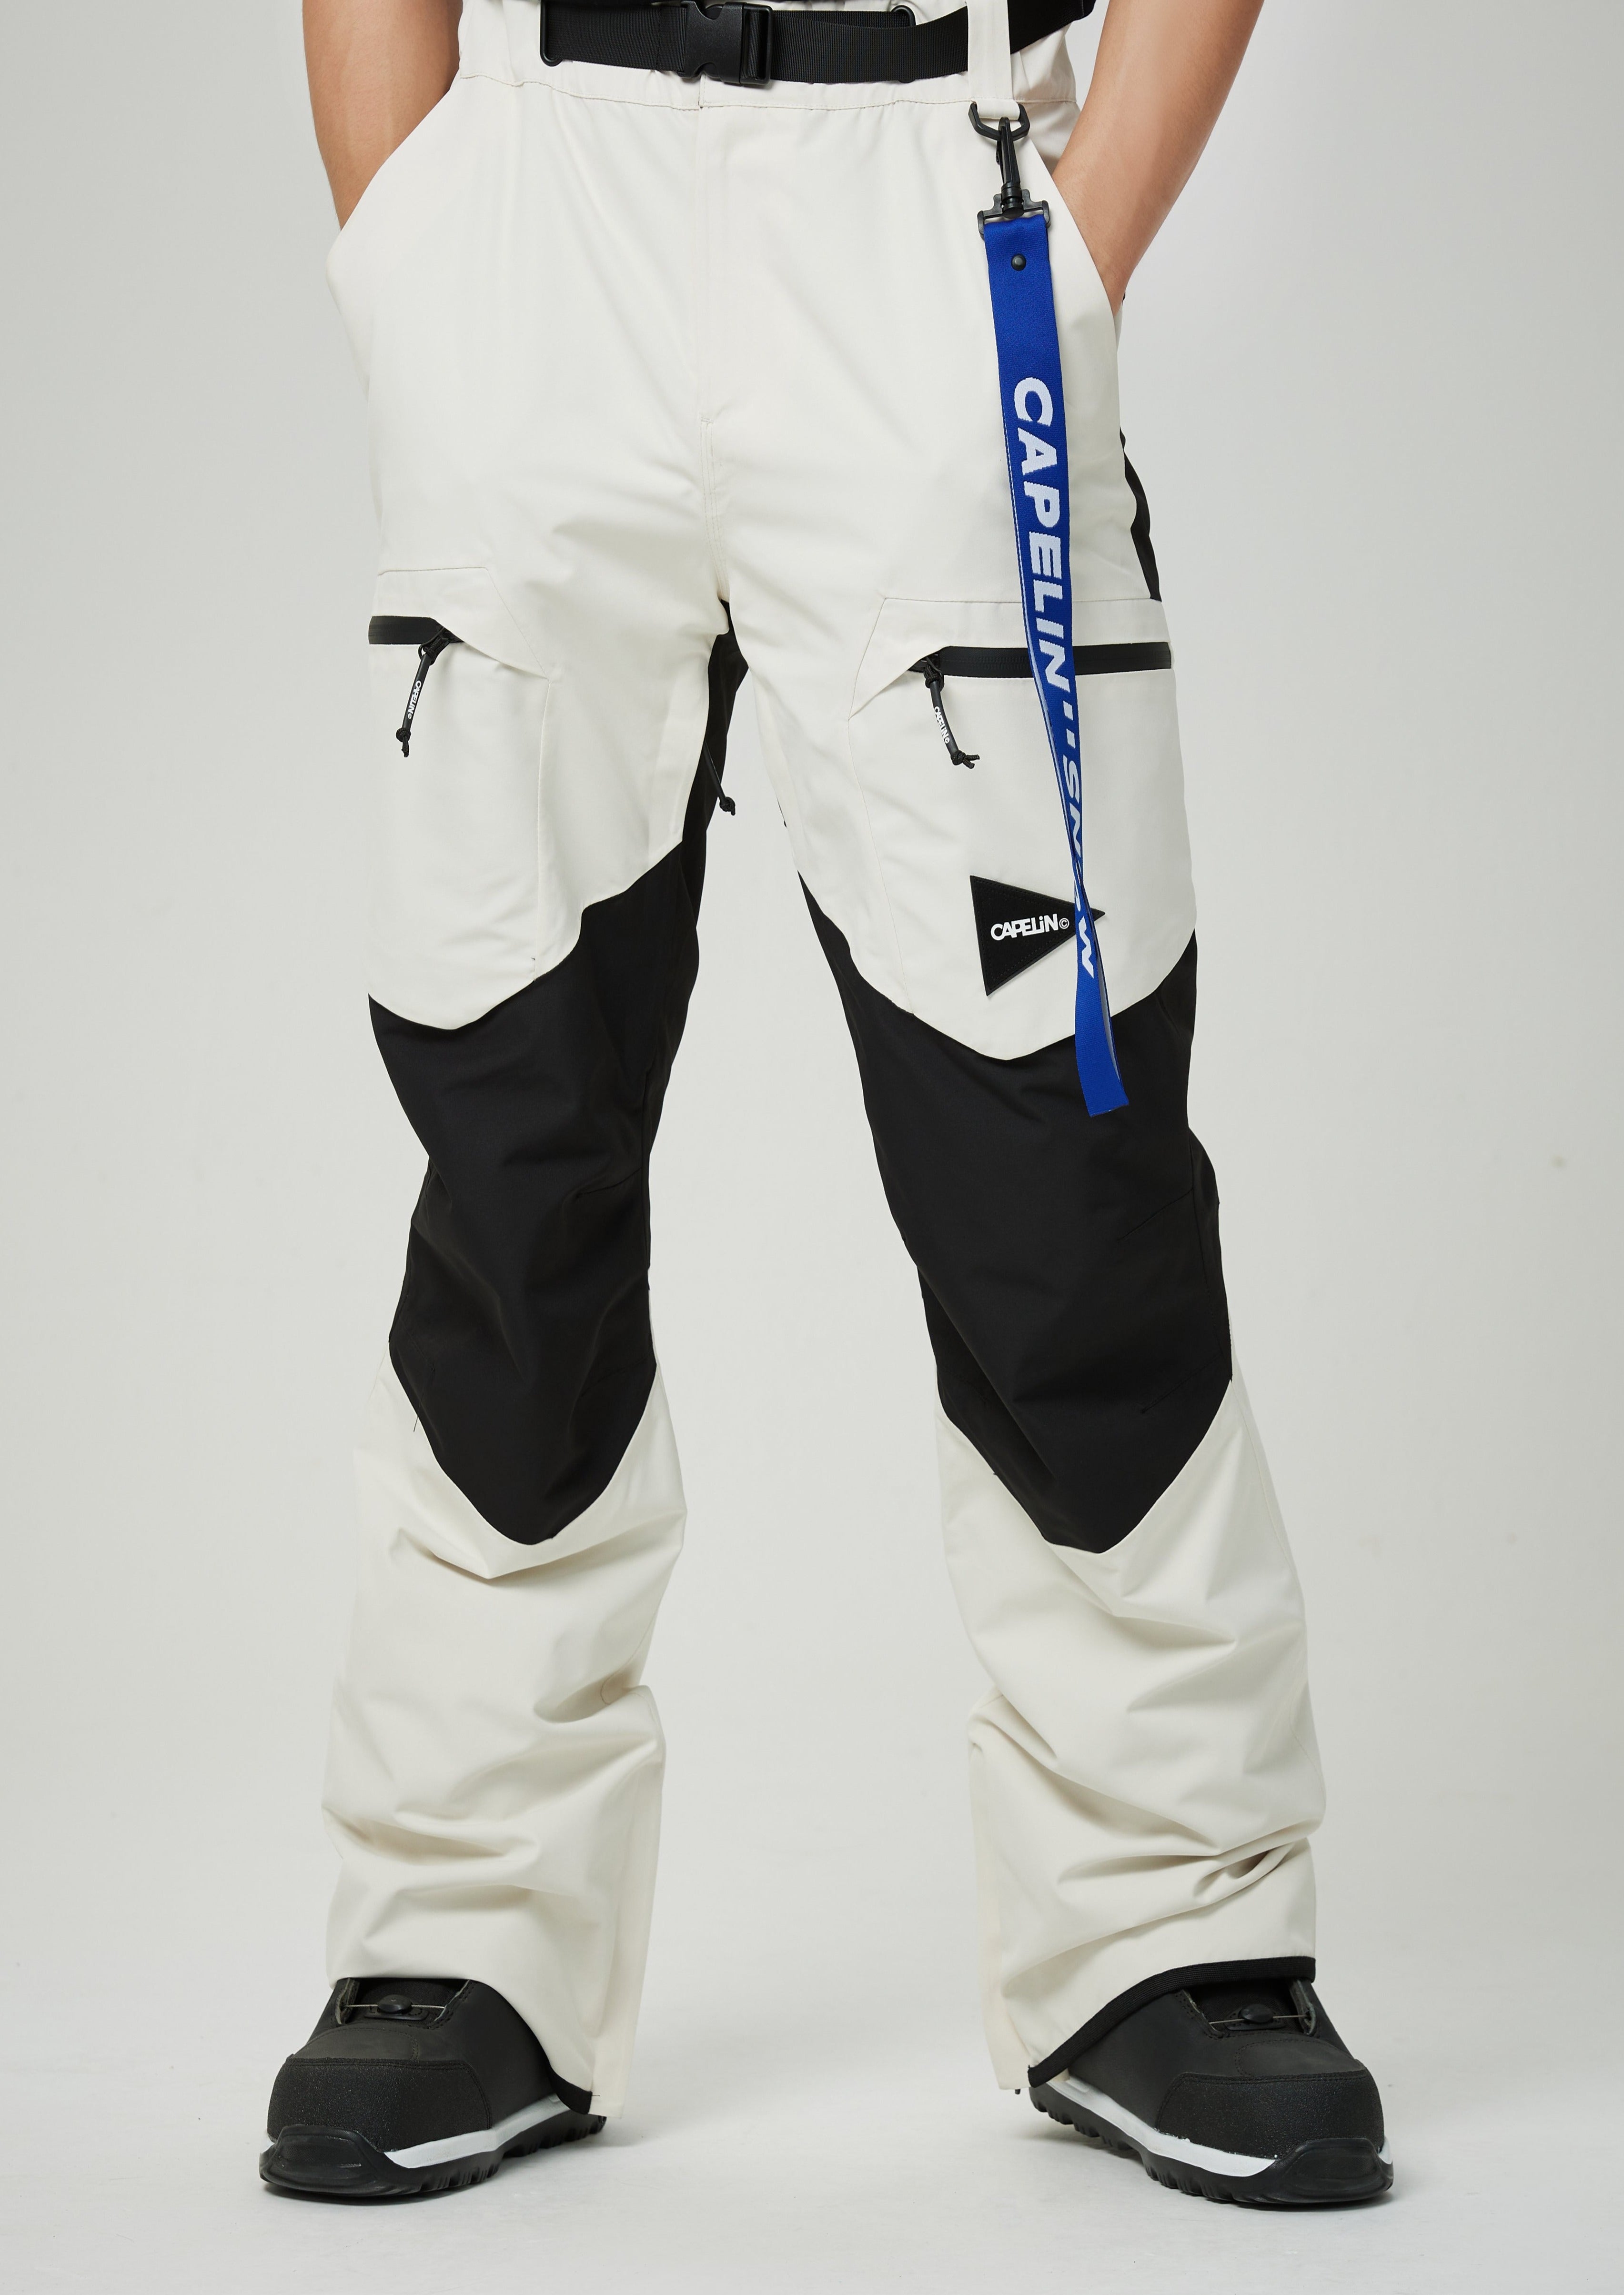 Pants -- Capelin Crew ski & snowboard wear